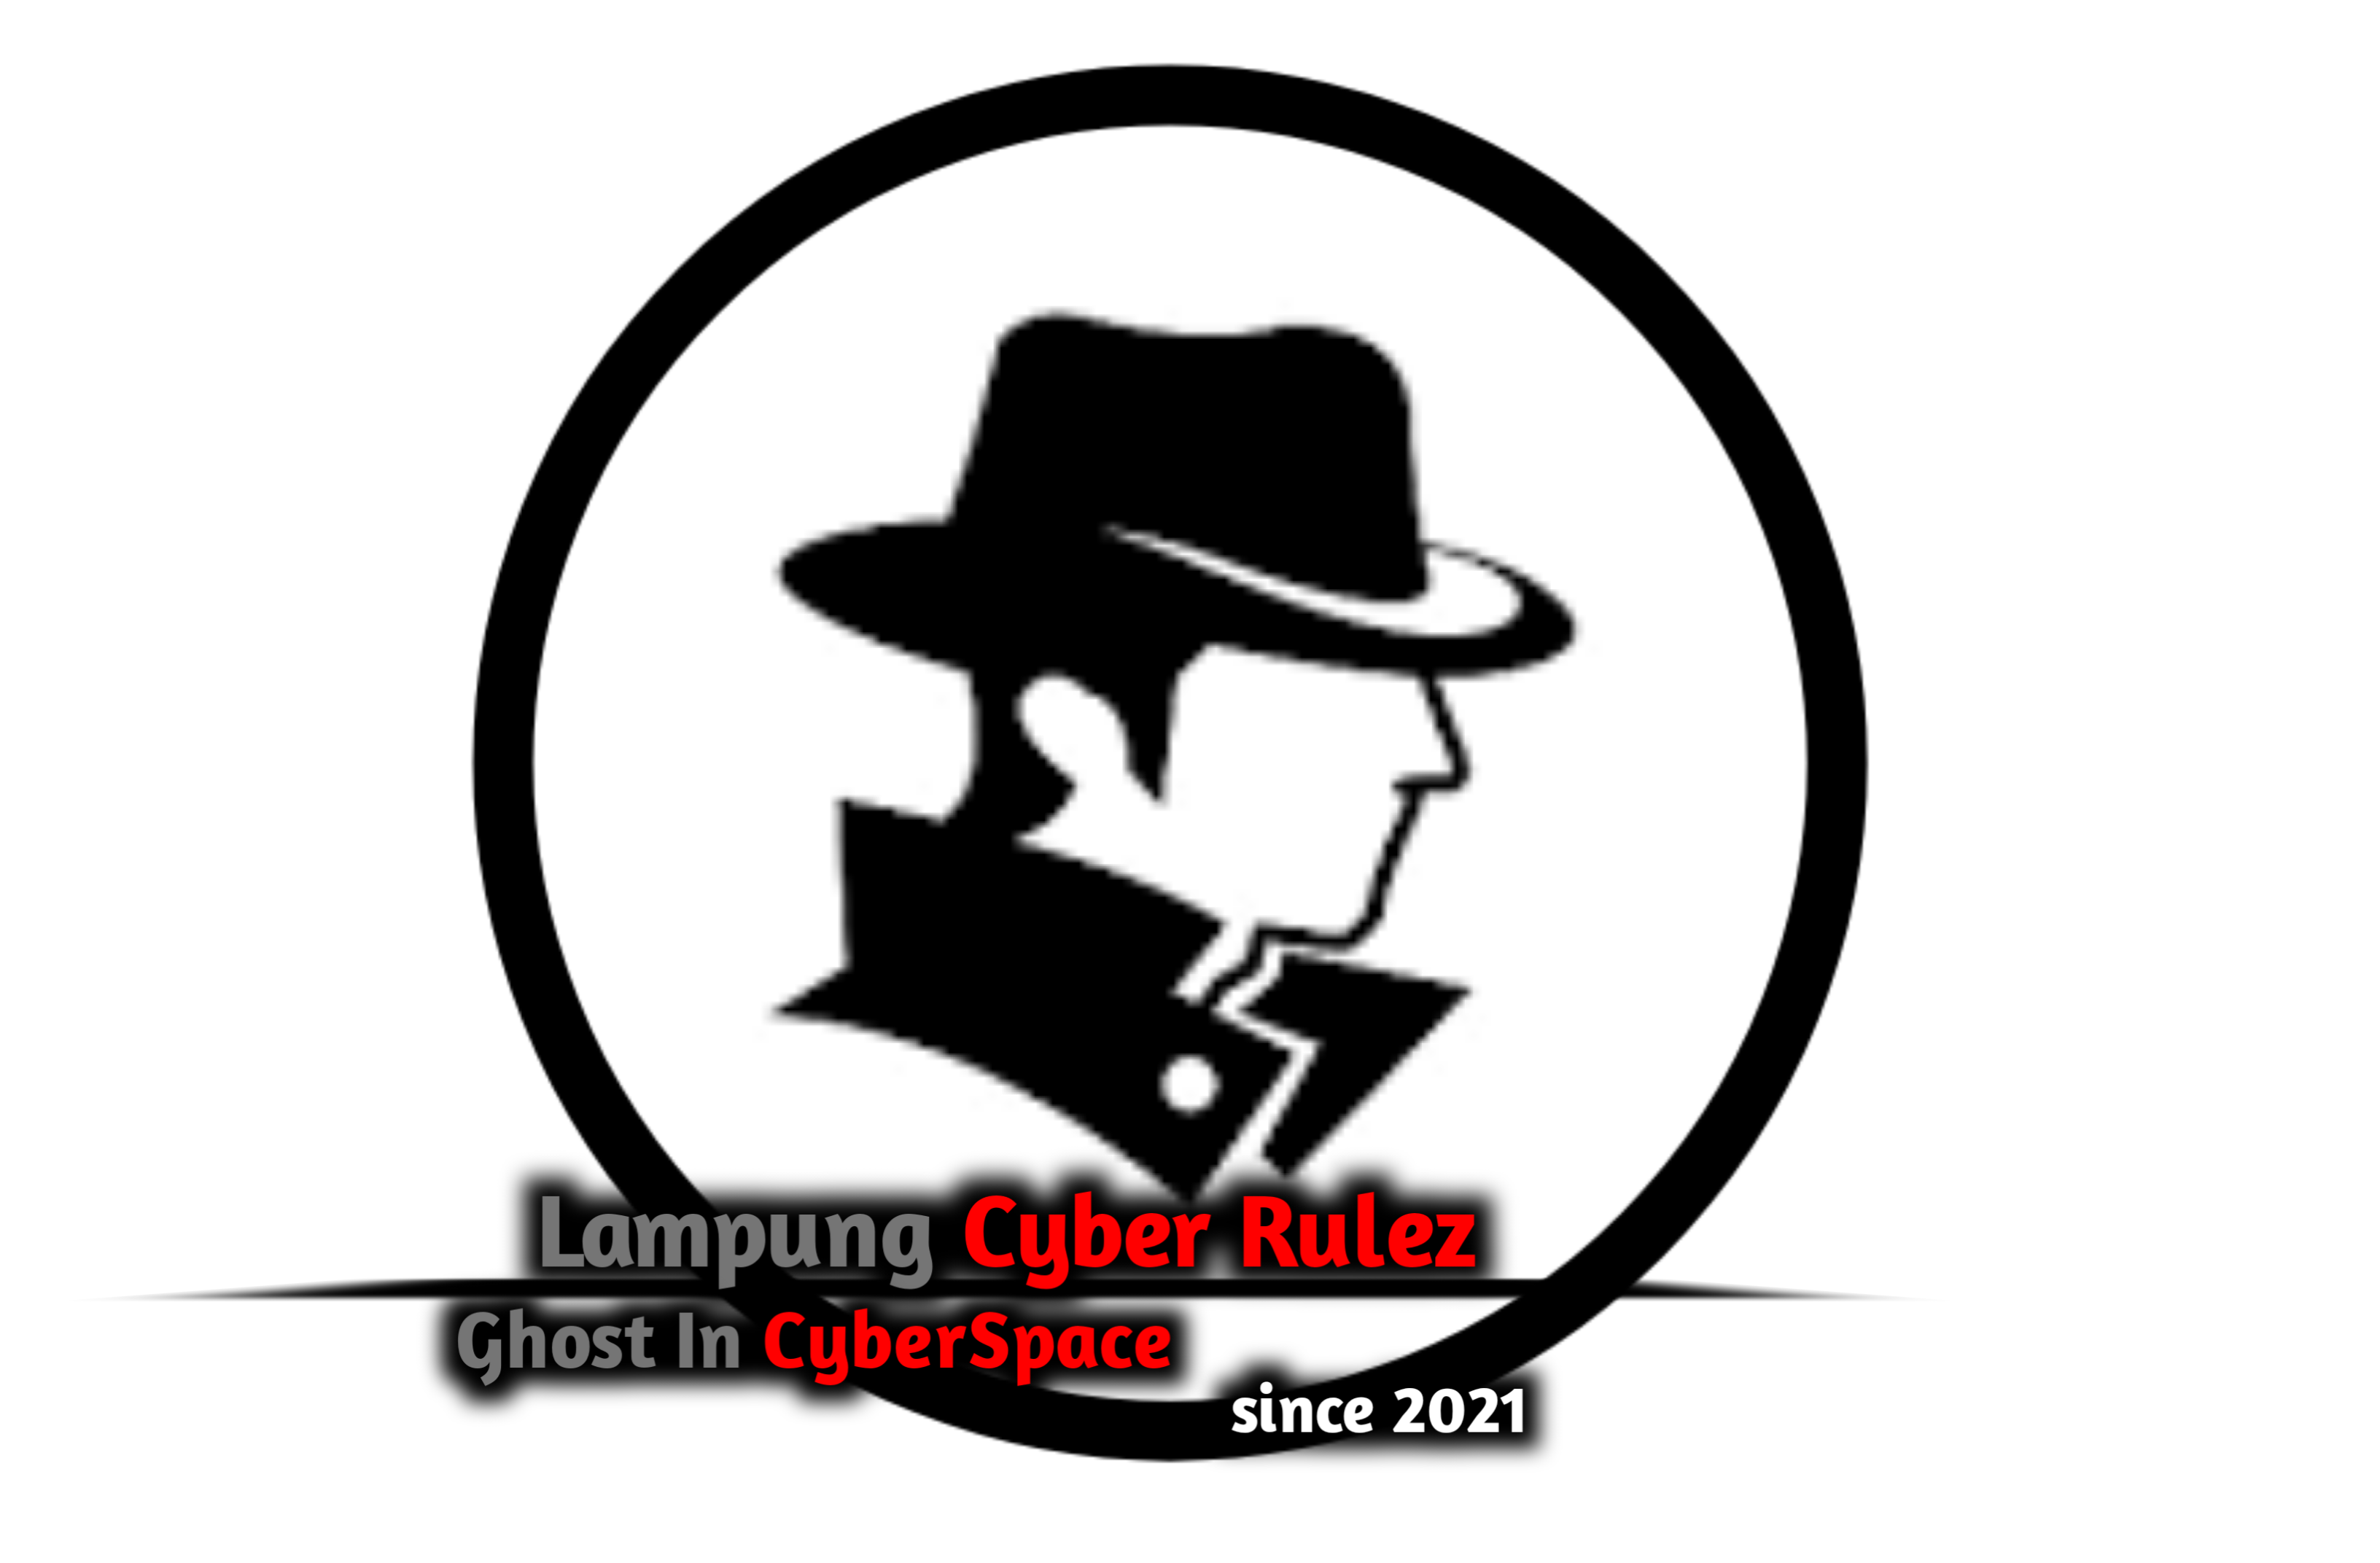 Lampung Cyber Rulez